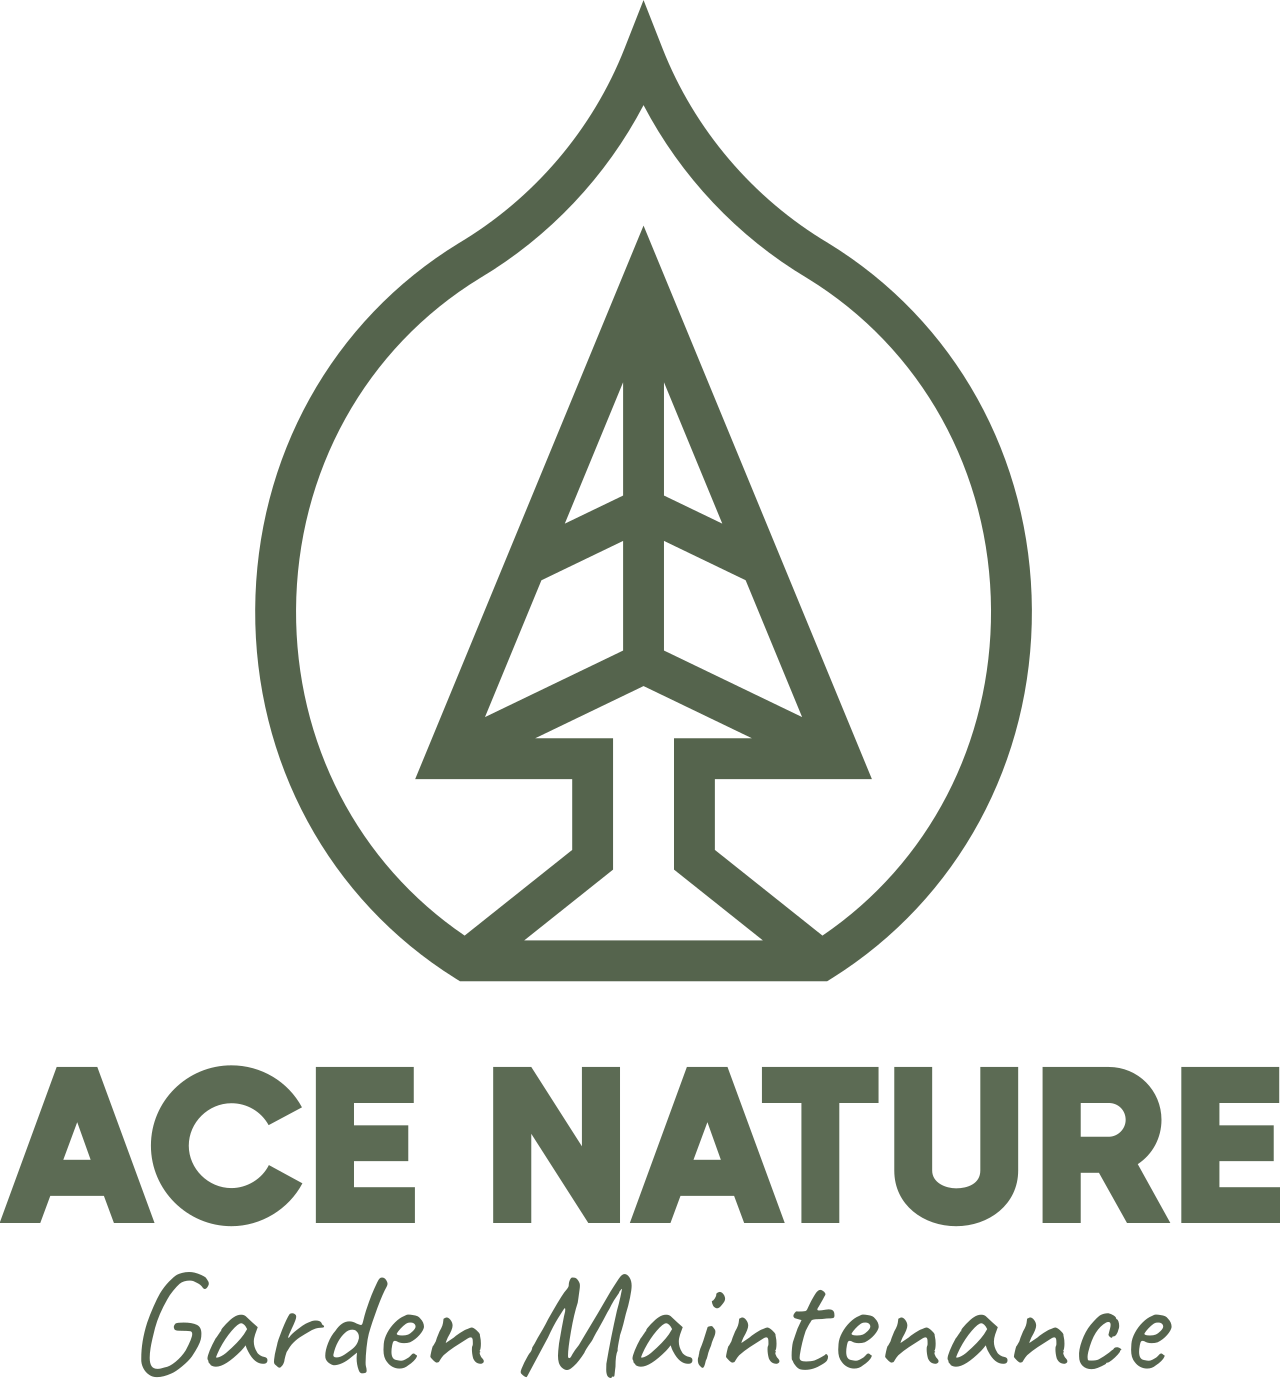 ace nature's logo